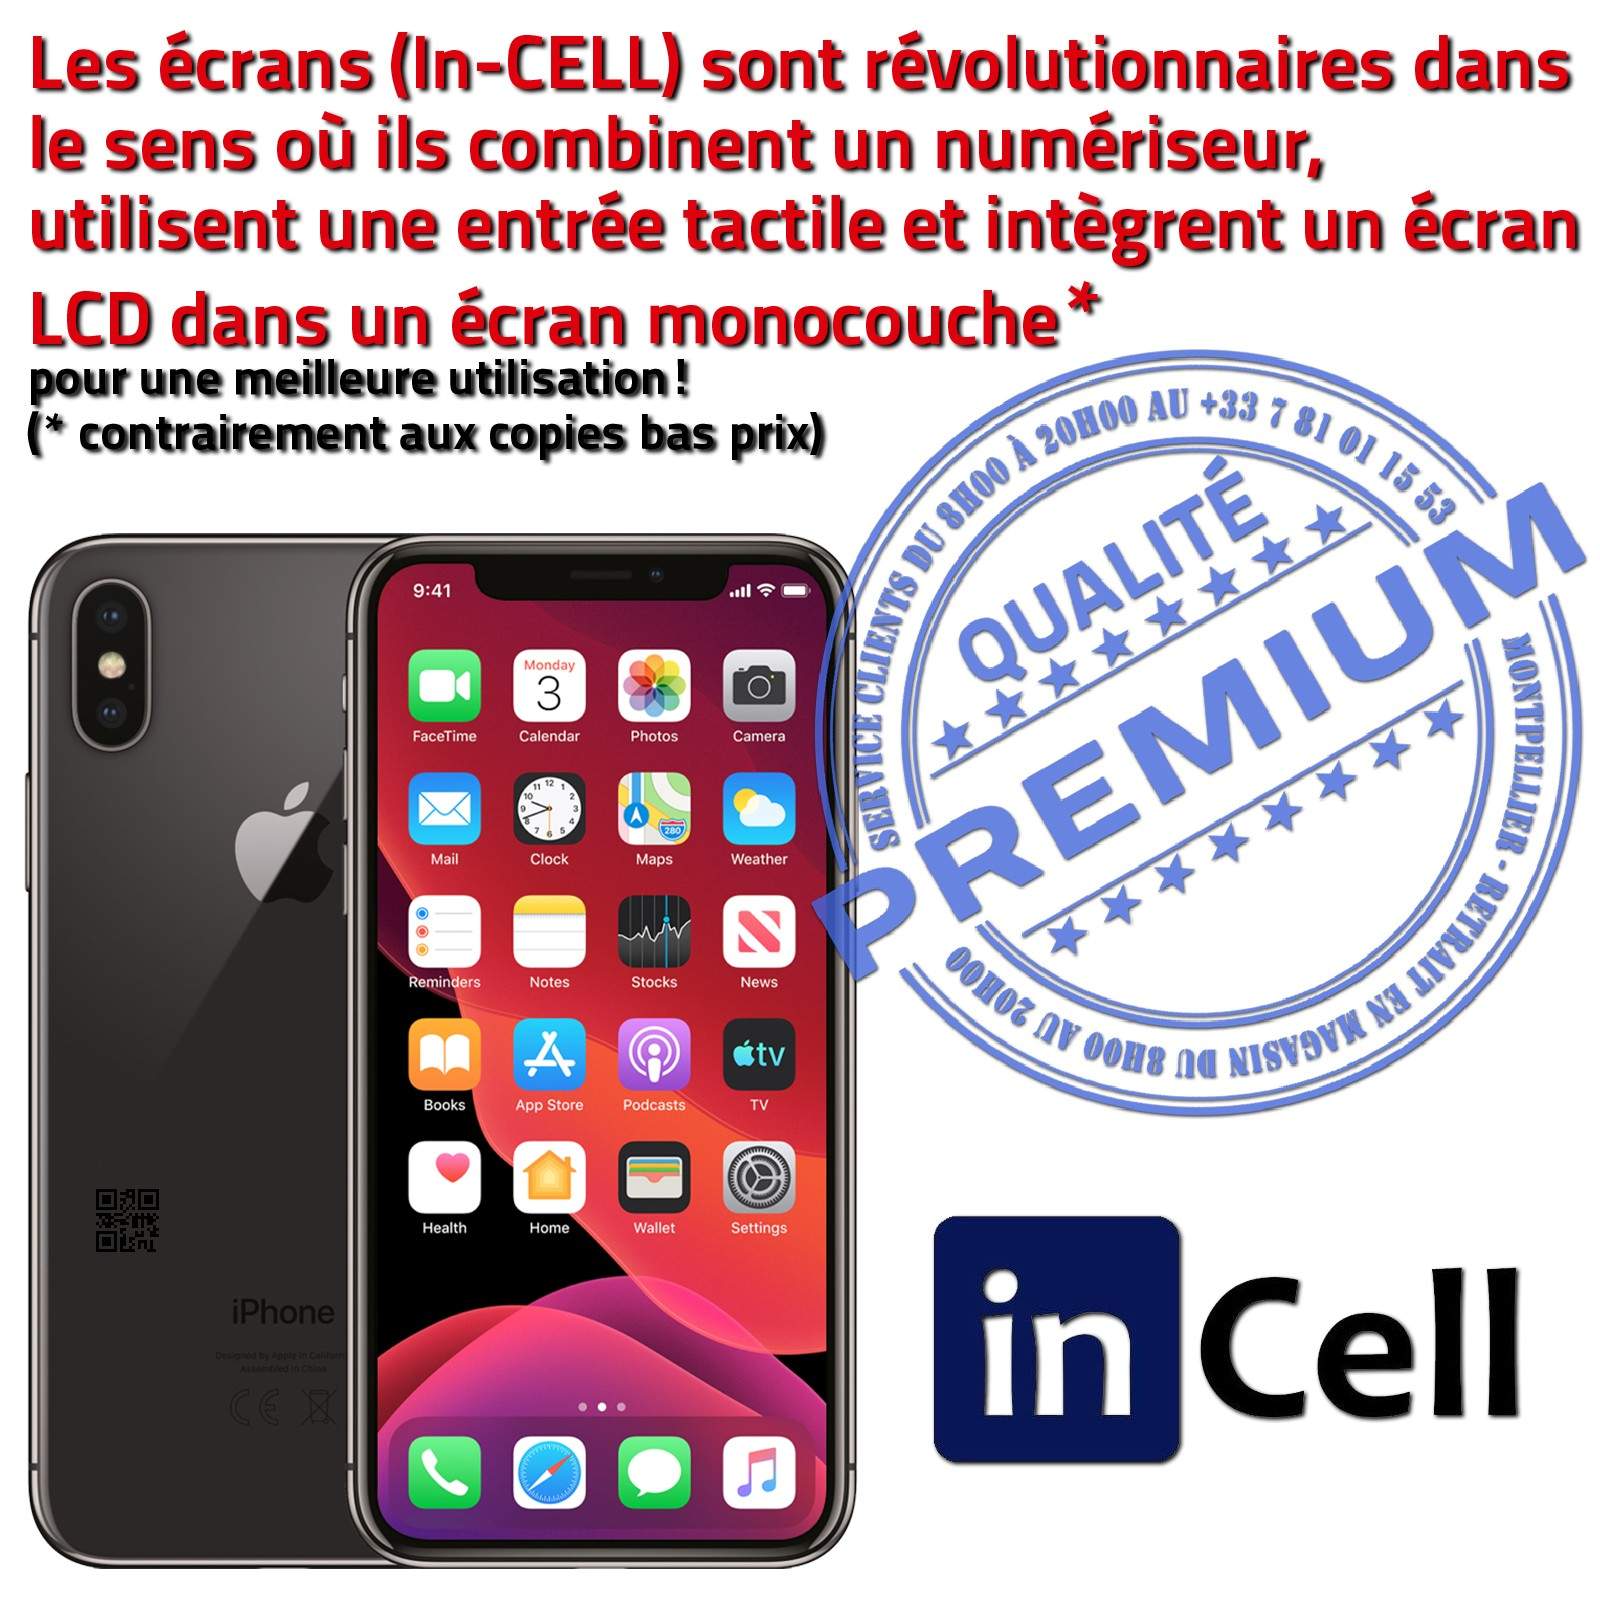 https://media3.24hshop.fr/19854-thickbox_default/lcd-iphone-11-a2221-ecran-complet-incell-apple-premium-super-retina-61in-vitre-smartphone-affichage-true-tone-cristaux-liquides.jpg